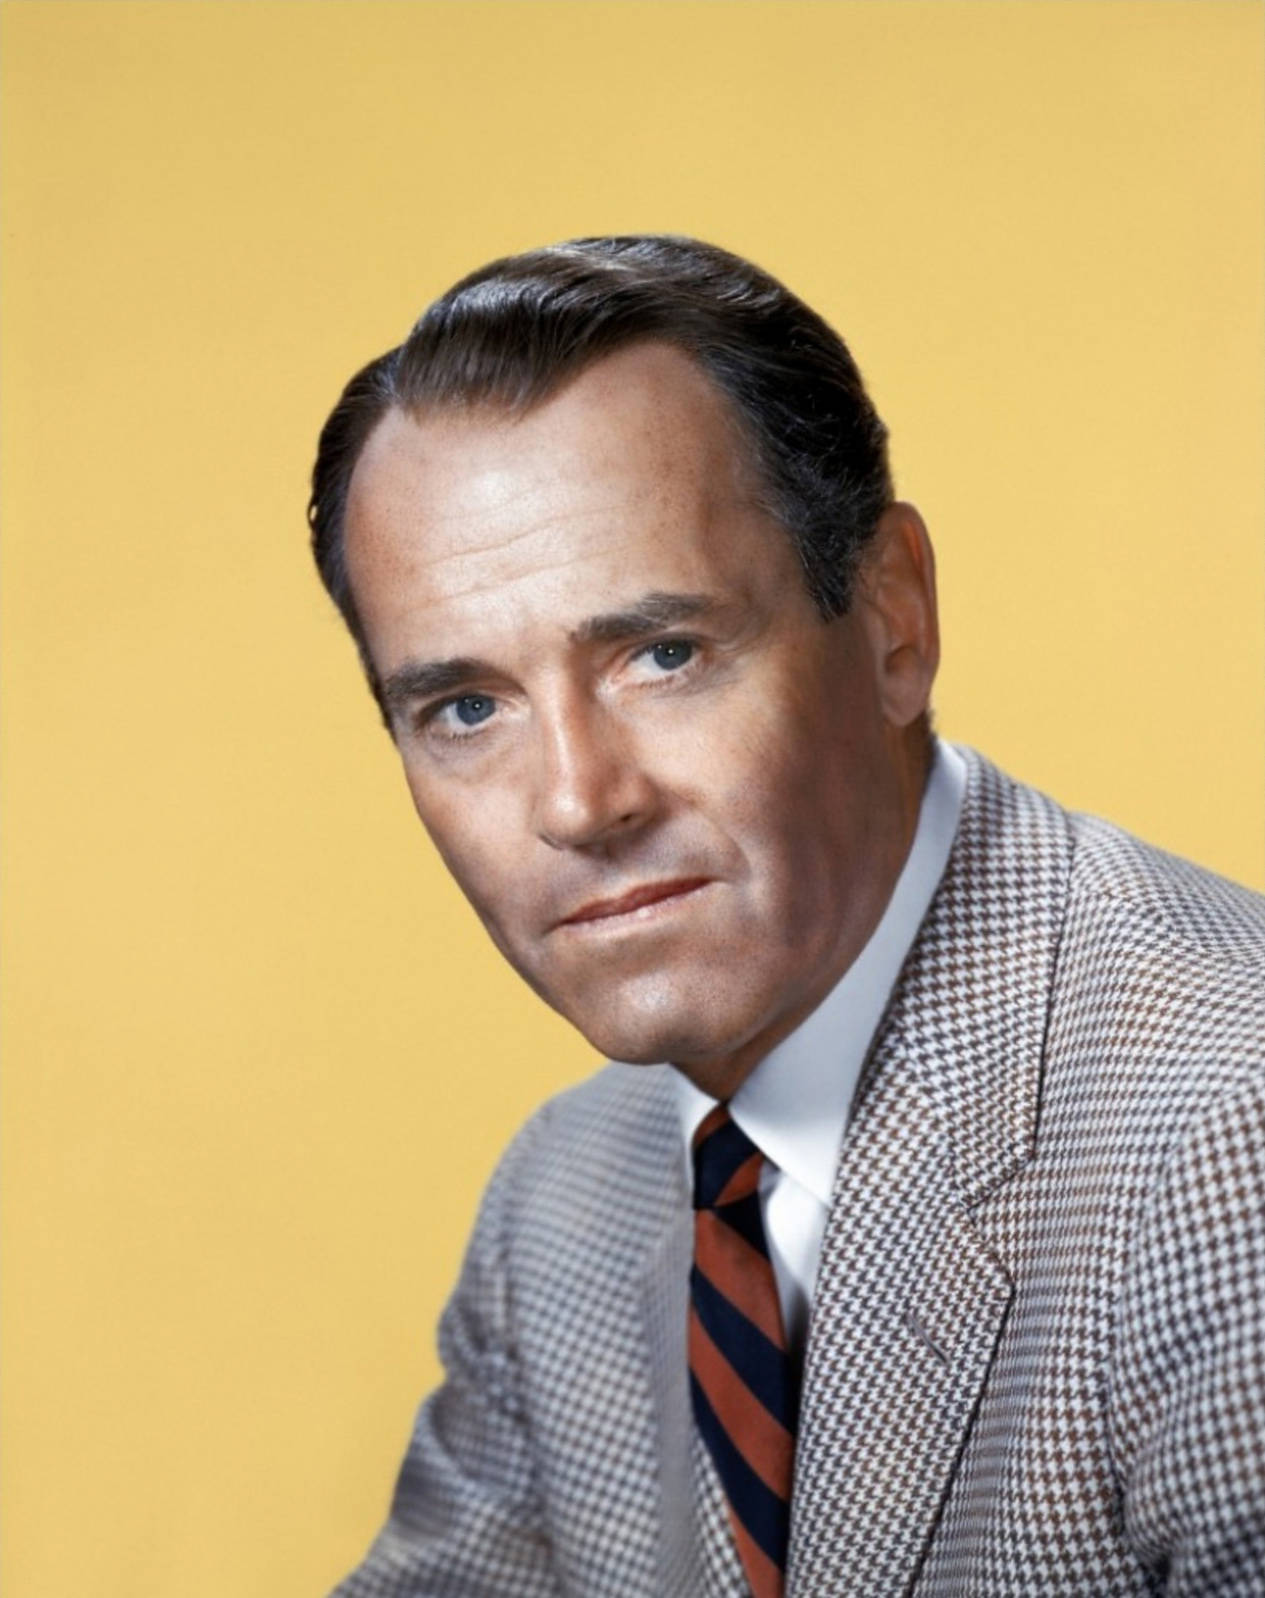 Retratode 1955 Del Actor Estadounidense Henry Fonda. Fondo de pantalla